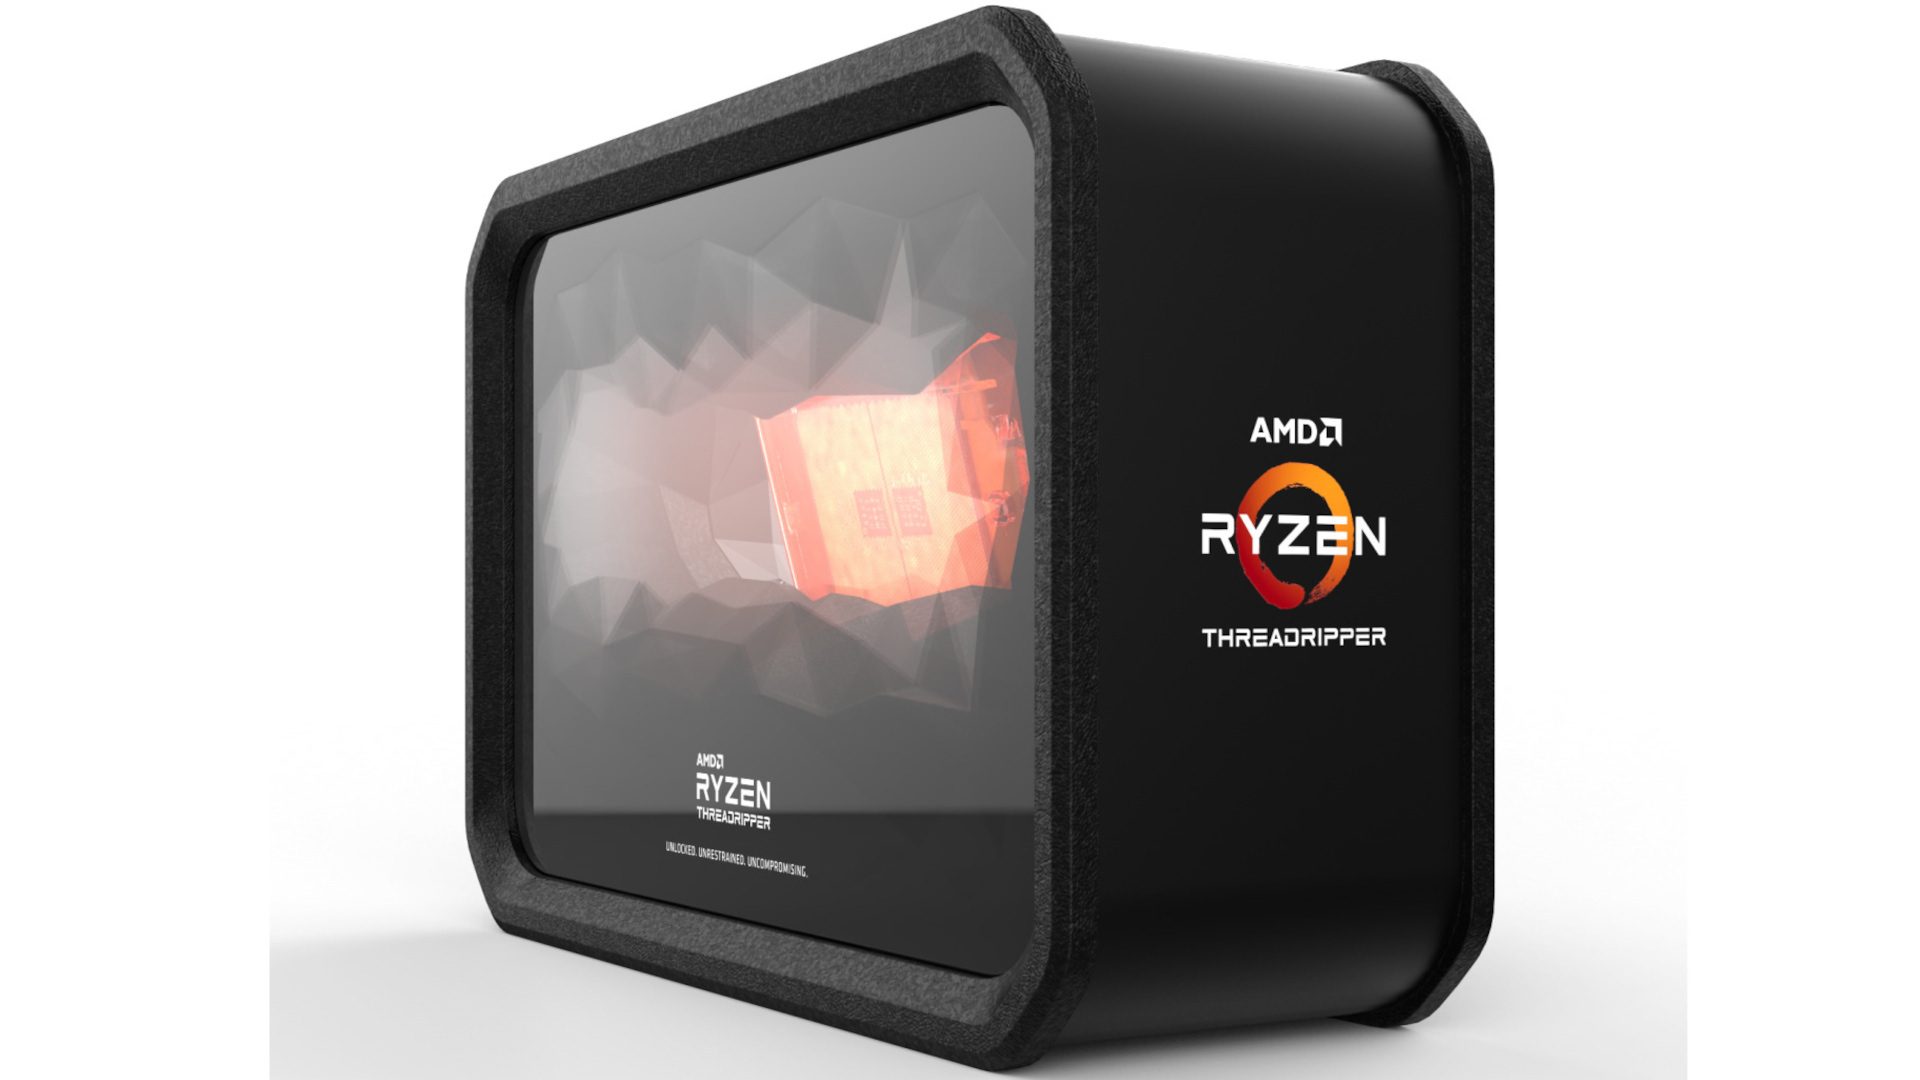 AMD Ryzen TR 2970X 4